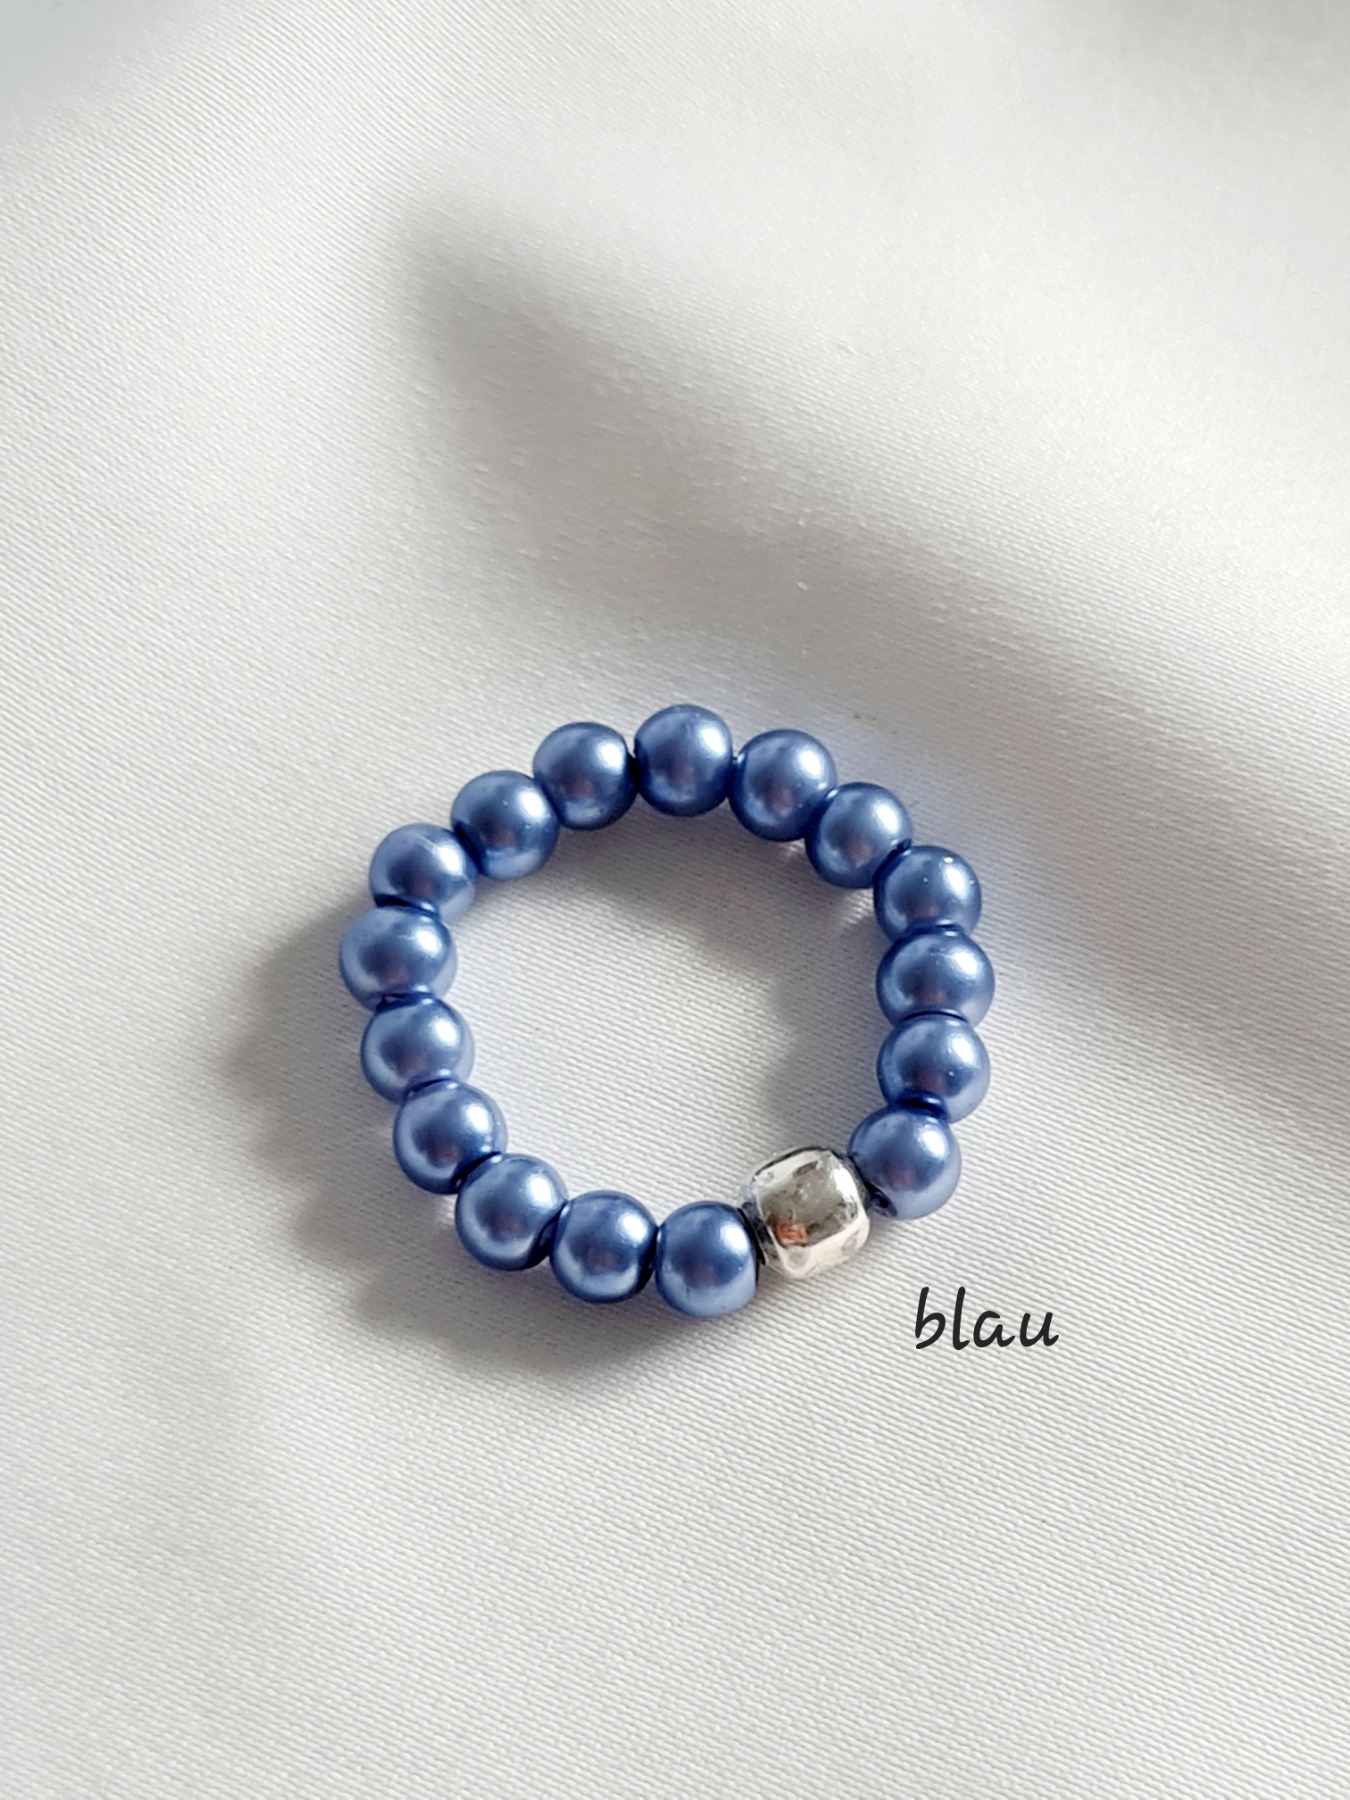 Blaue Perlenringe Glaswachsperlenringe elastisches Ringe Frauenringe 4